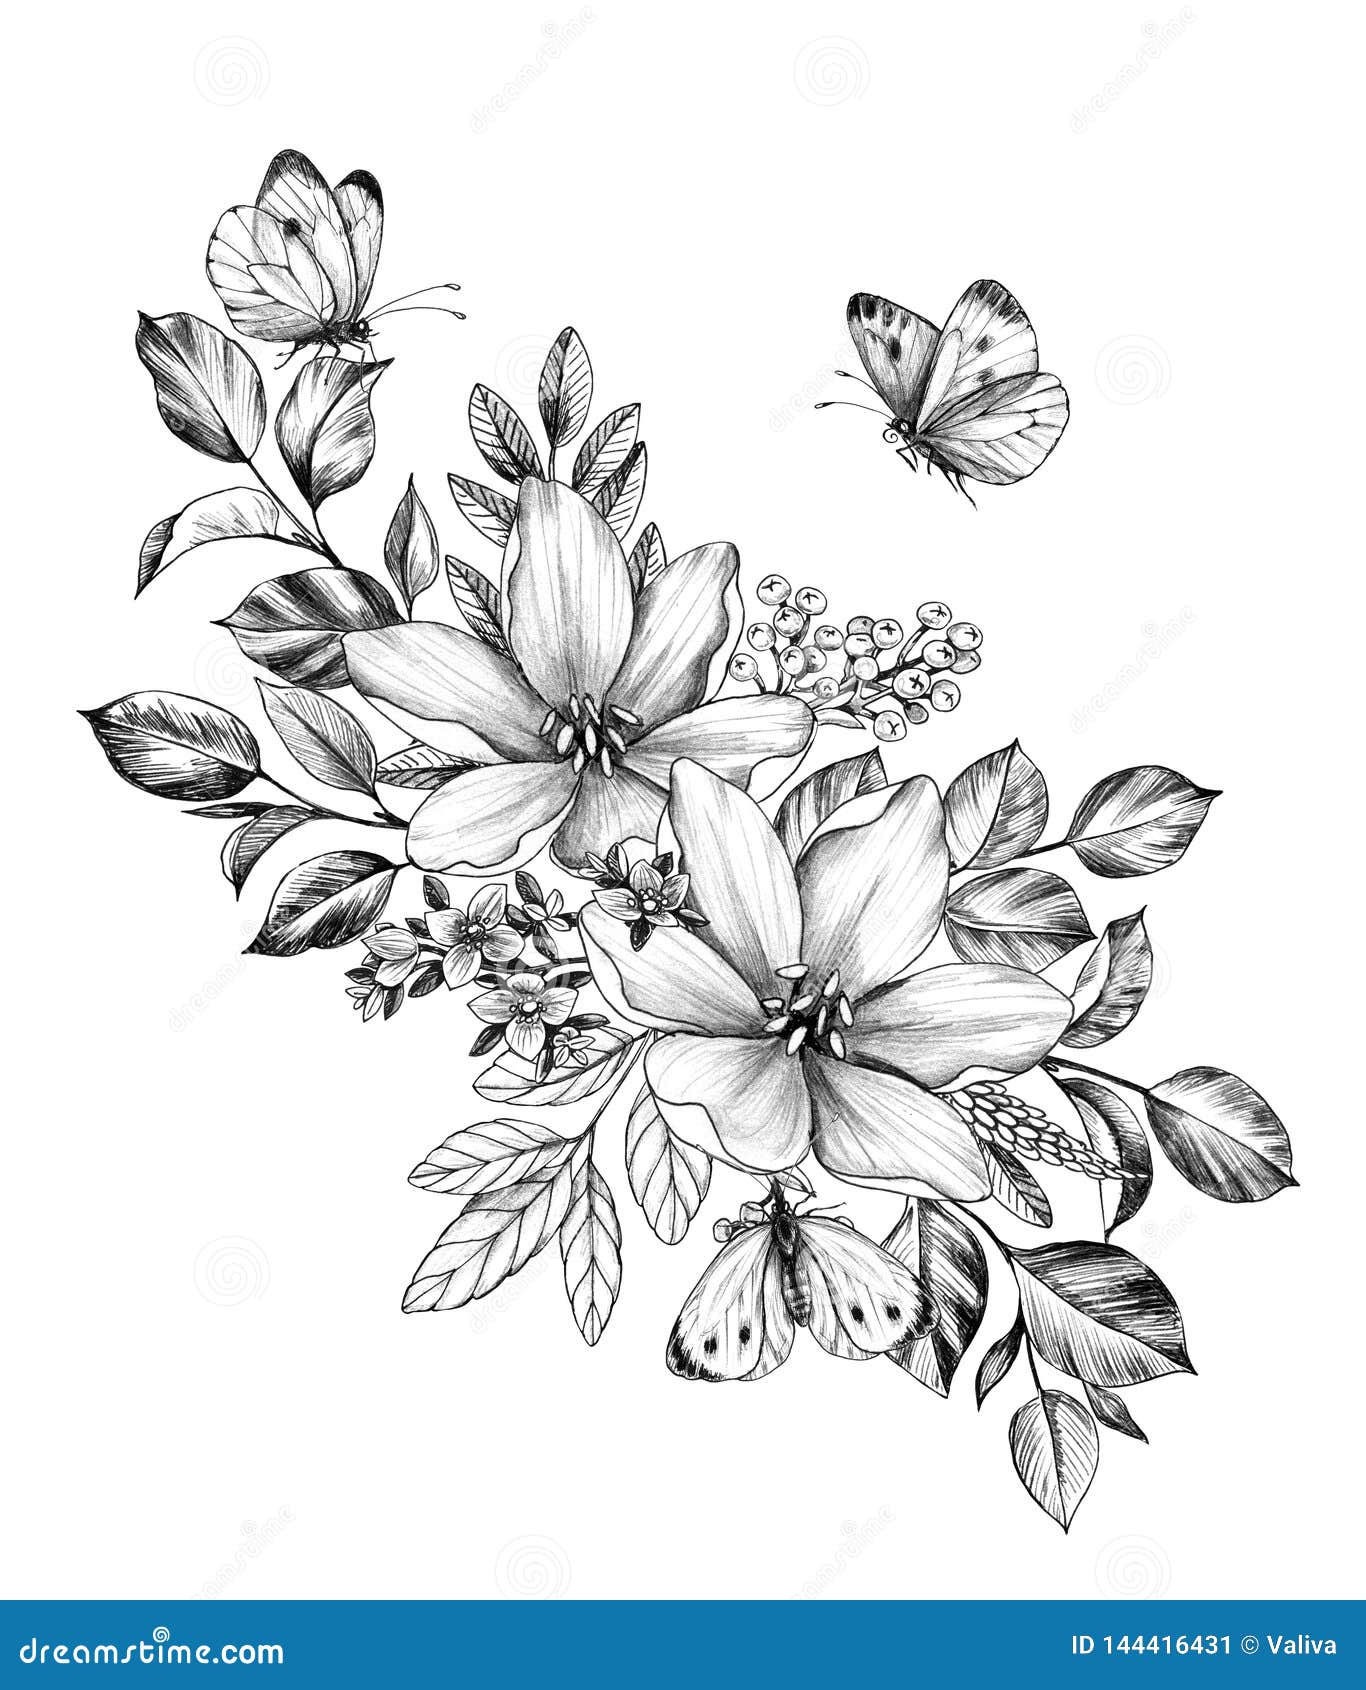 Pencil Sketch of Flowerpot - Etsy